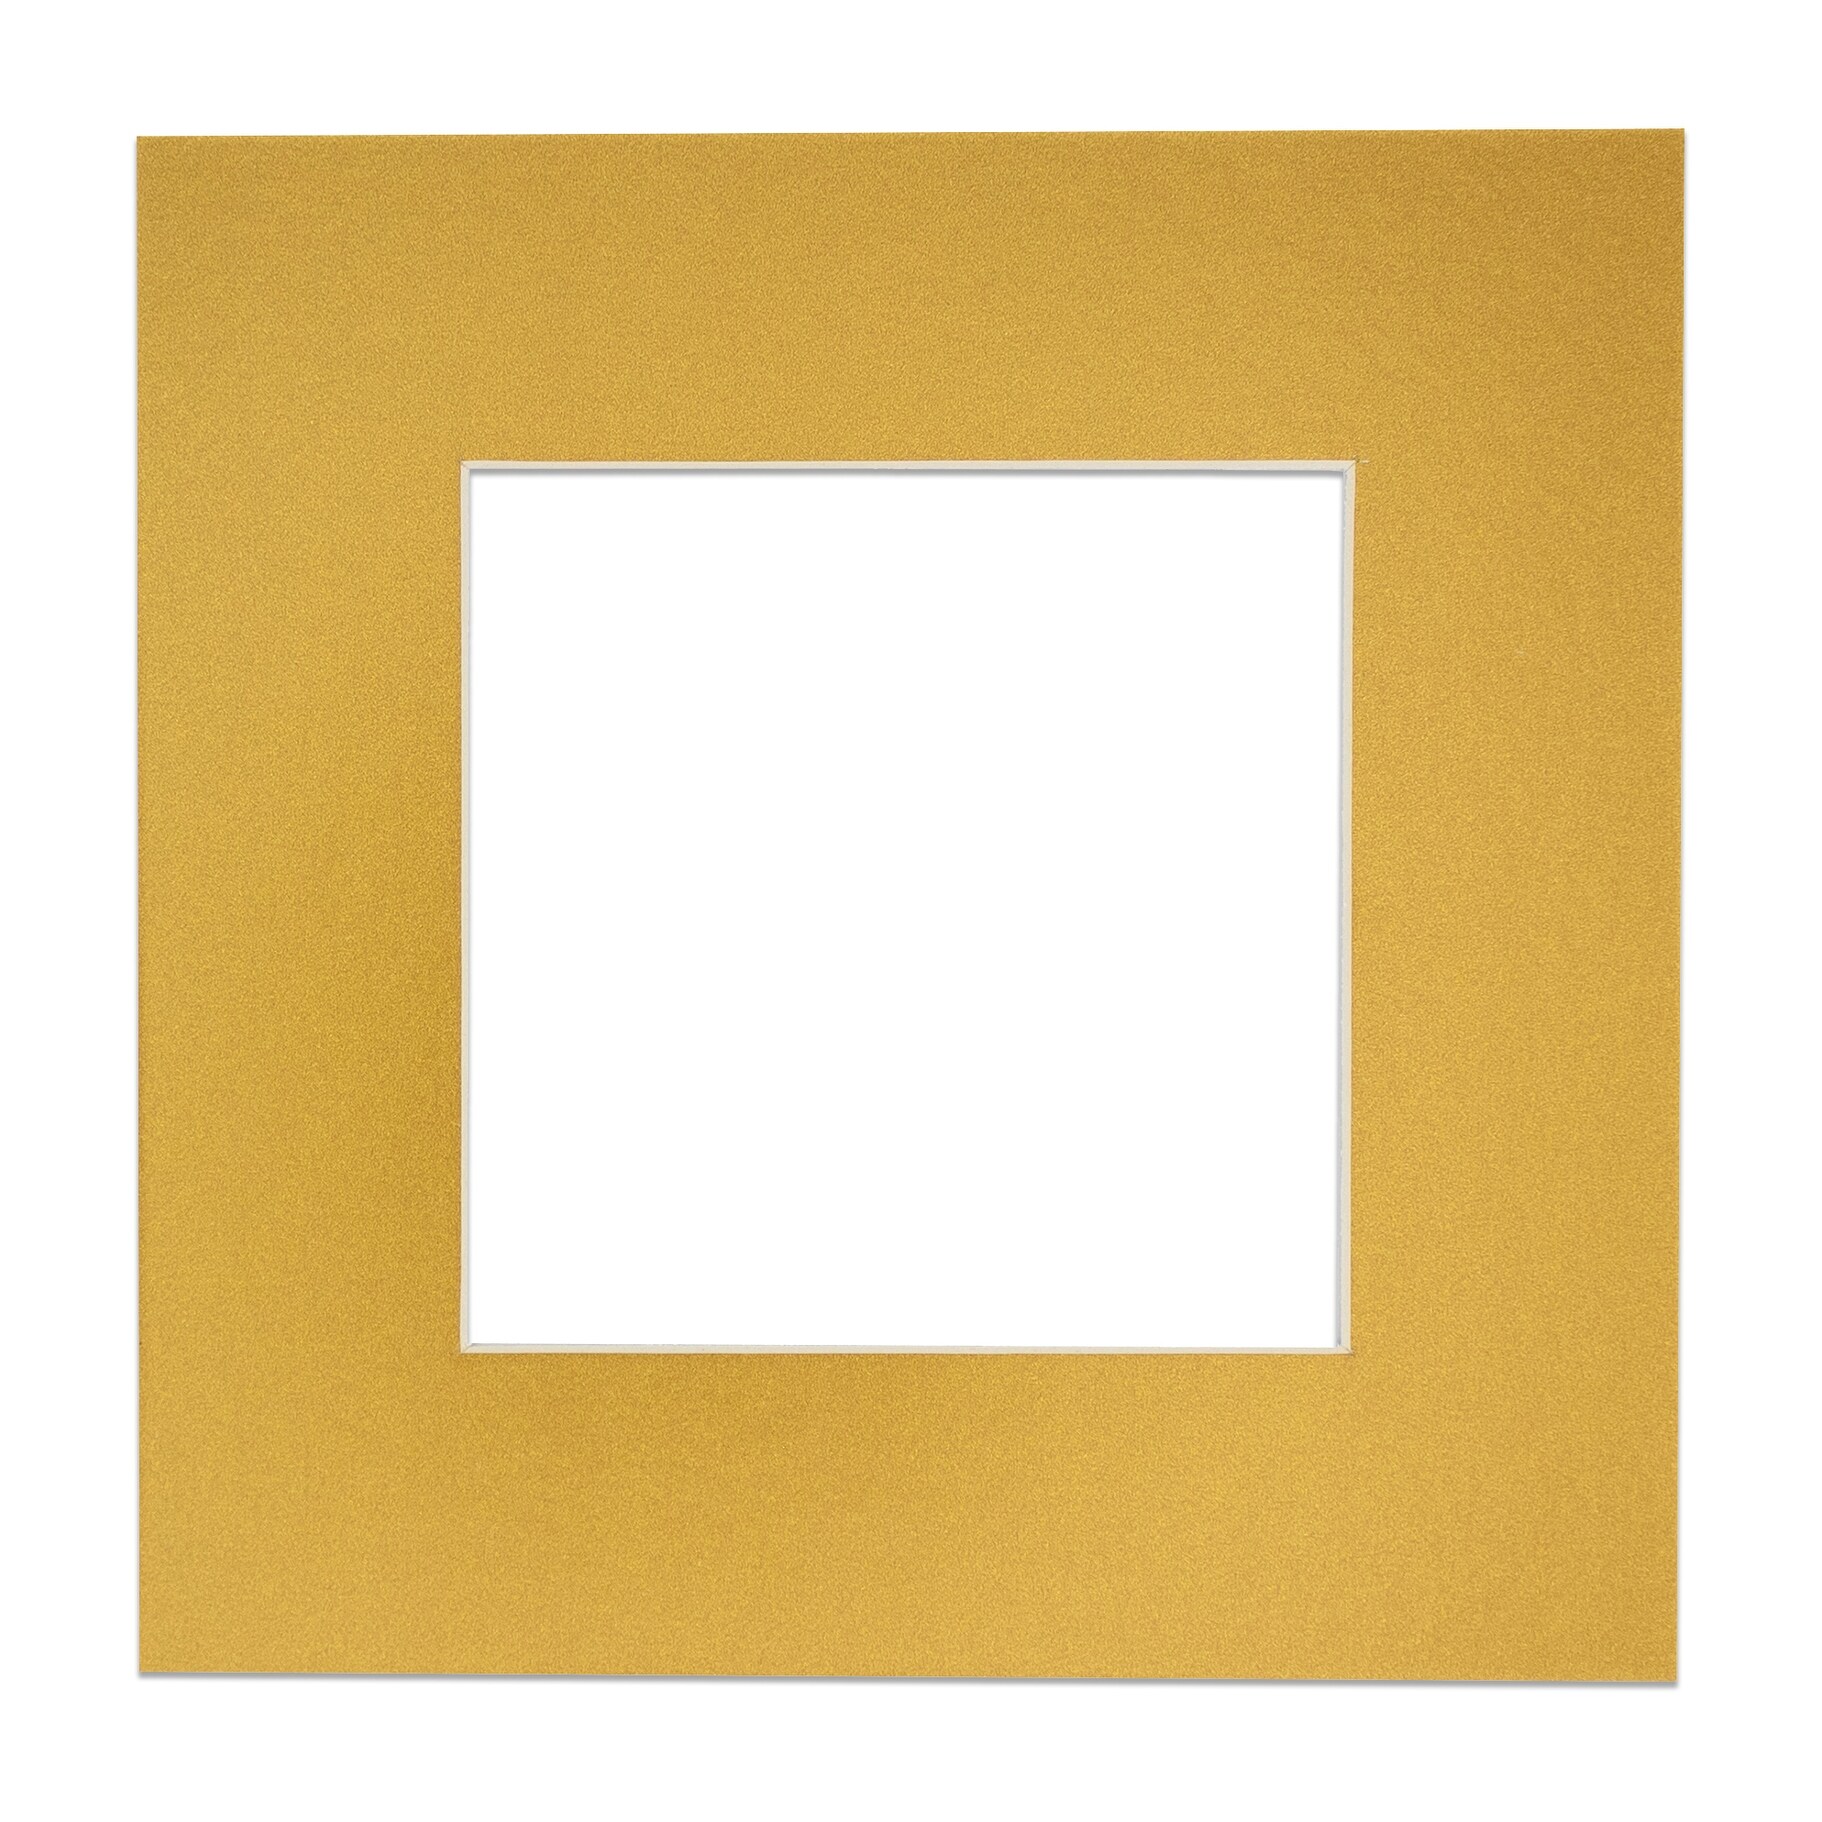 8x10 Mat for 10x12 Frame - Precut Mat Board Acid-Free Metallic Gold 8x10 Photo Matte for A 10x12 Picture Frame